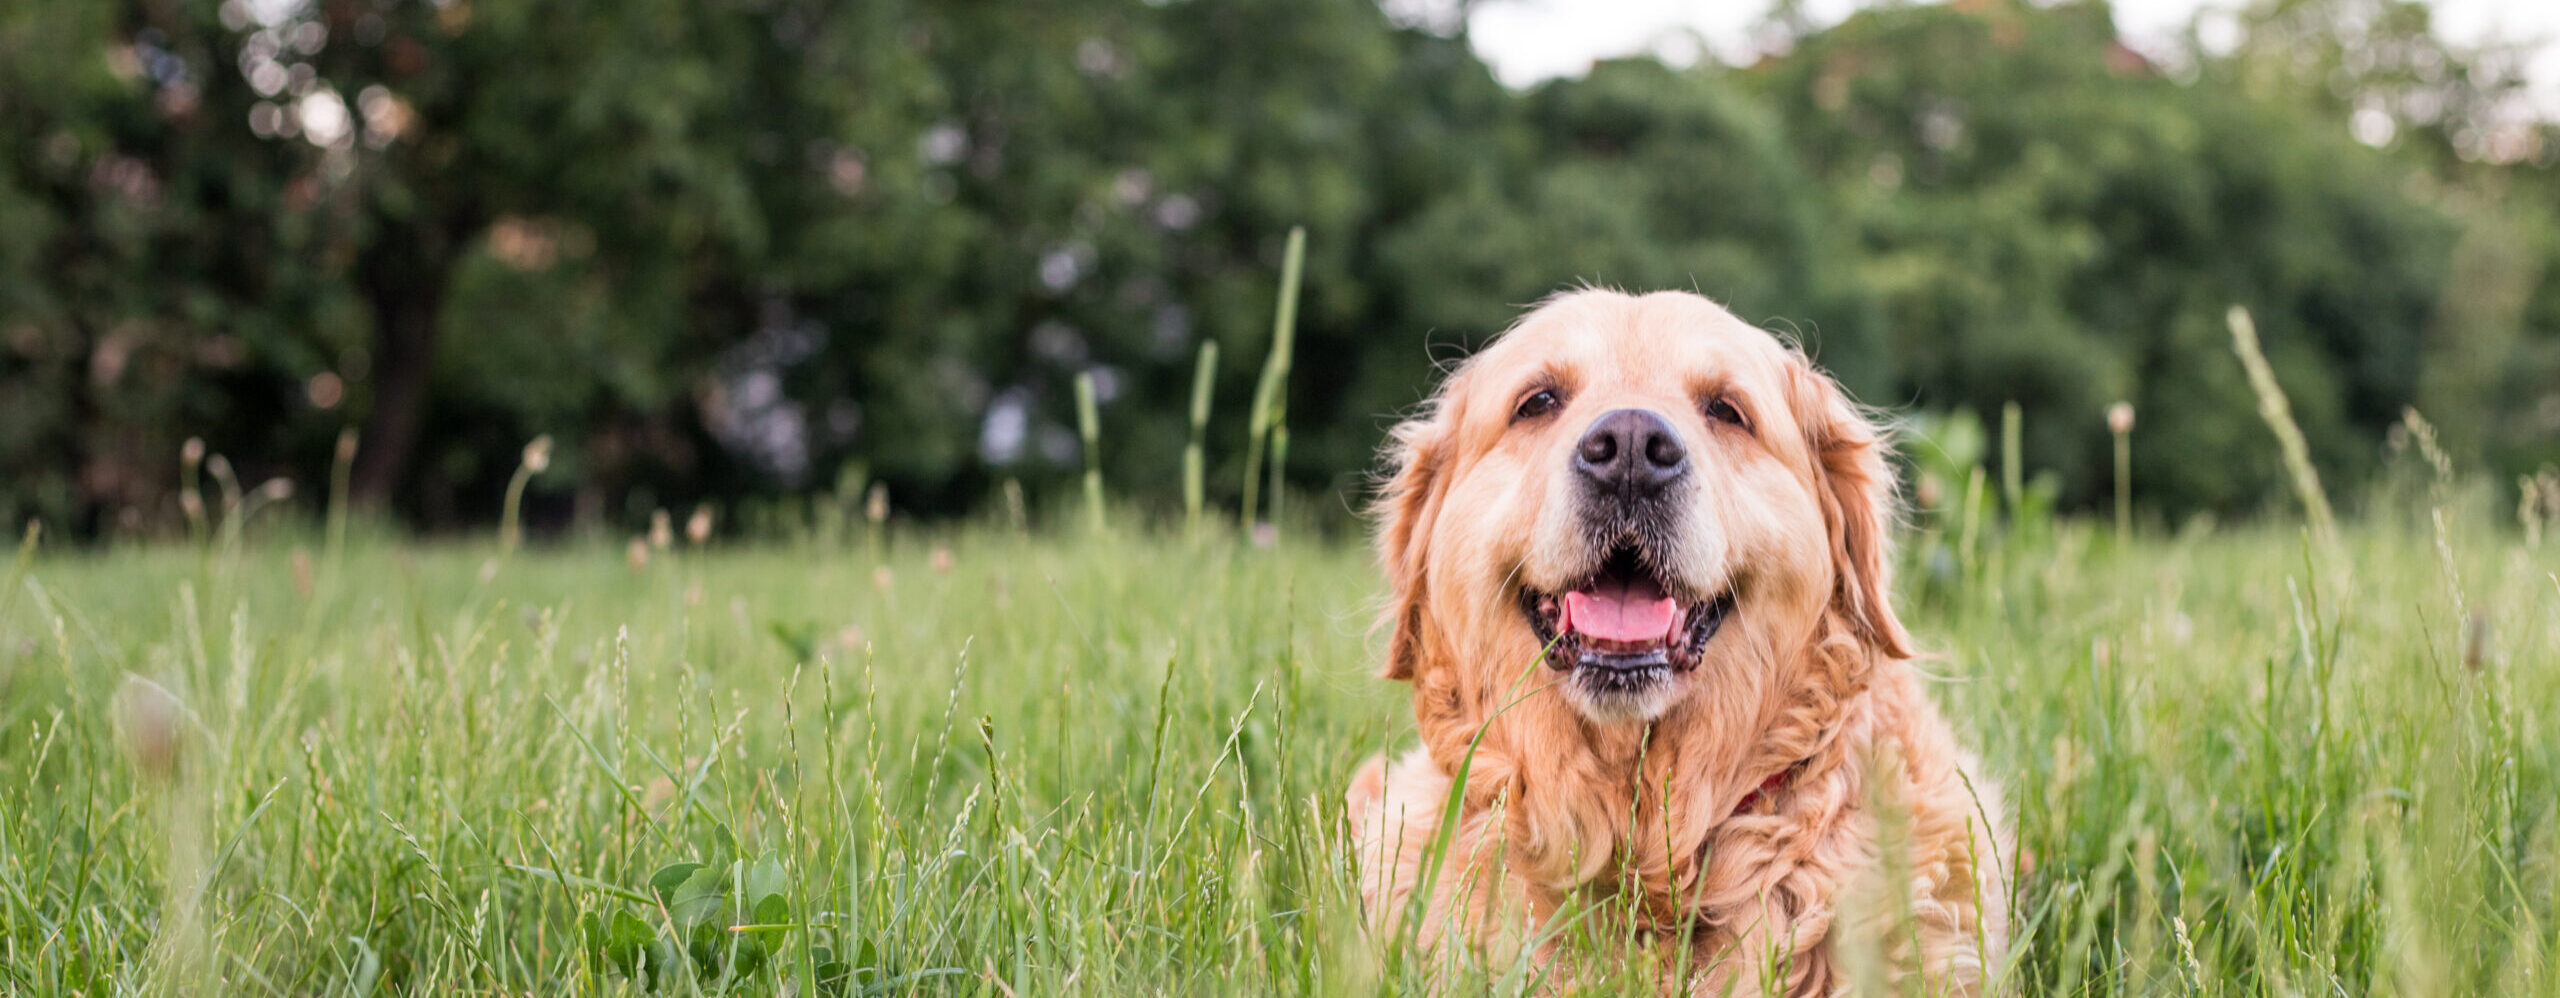 senior golden retriever dog smiling in a field